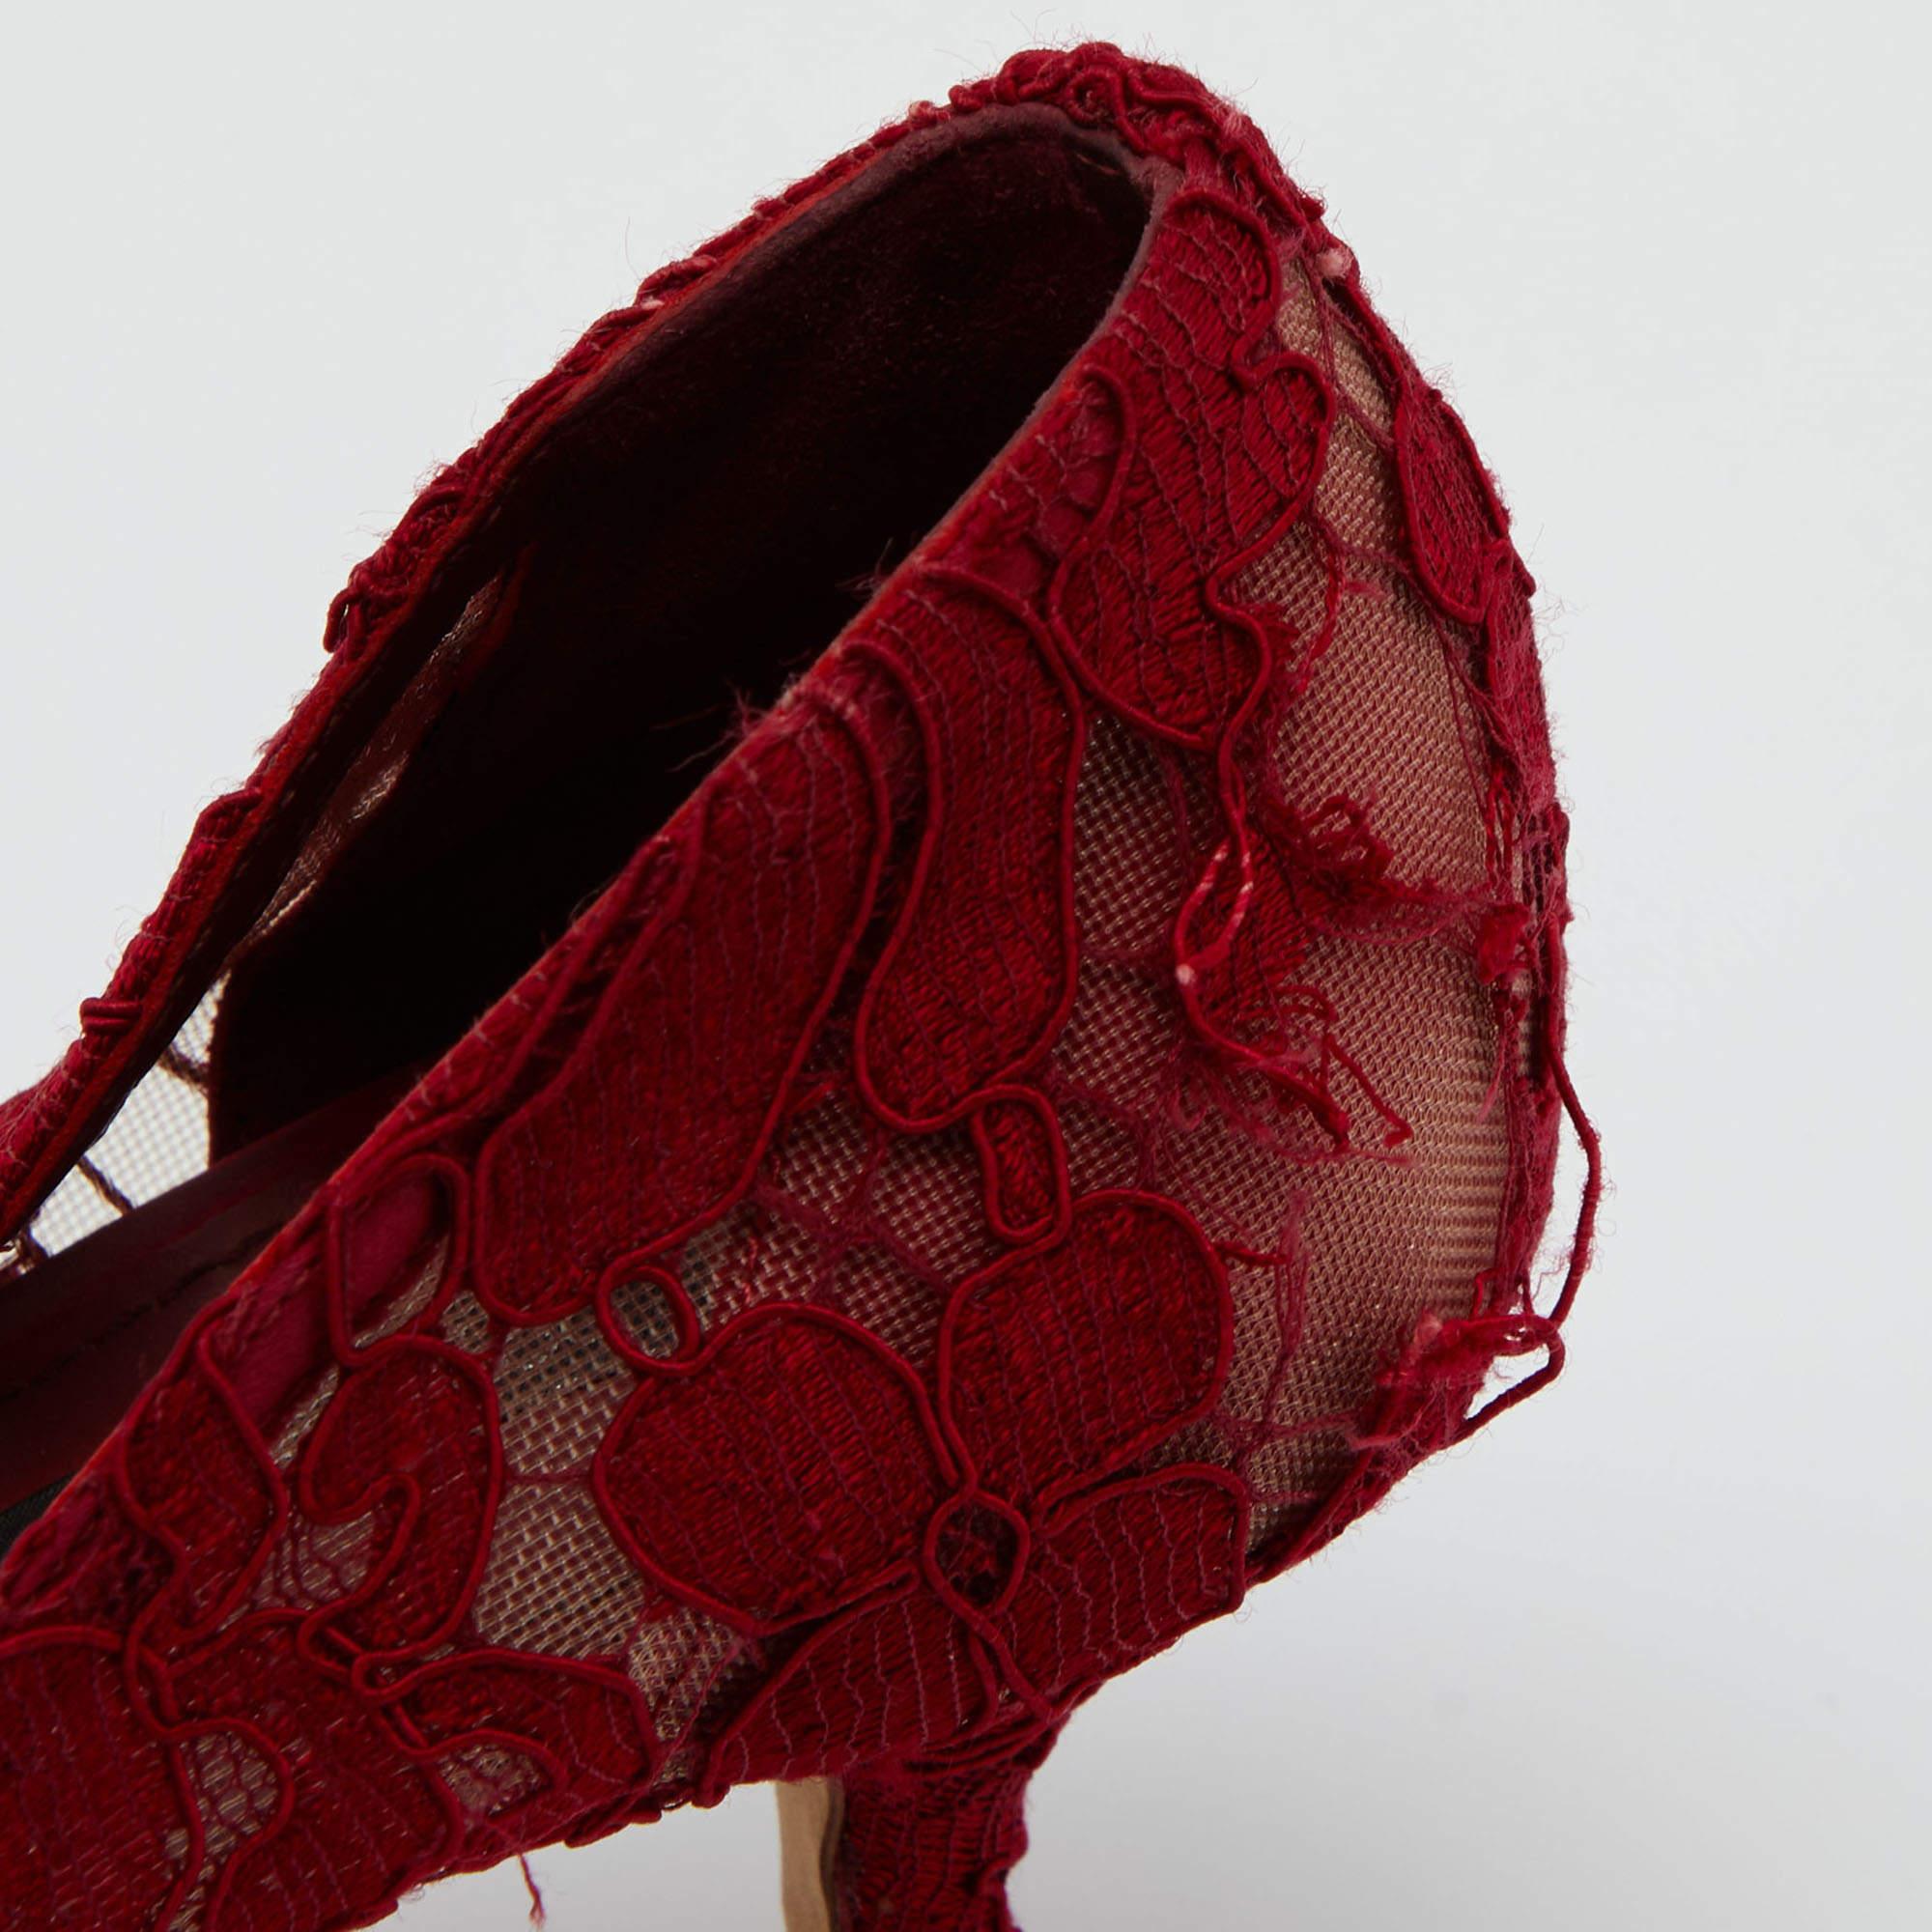 Dolce & Gabbana Red Lace Bellucci Pumps Size 37.5 5